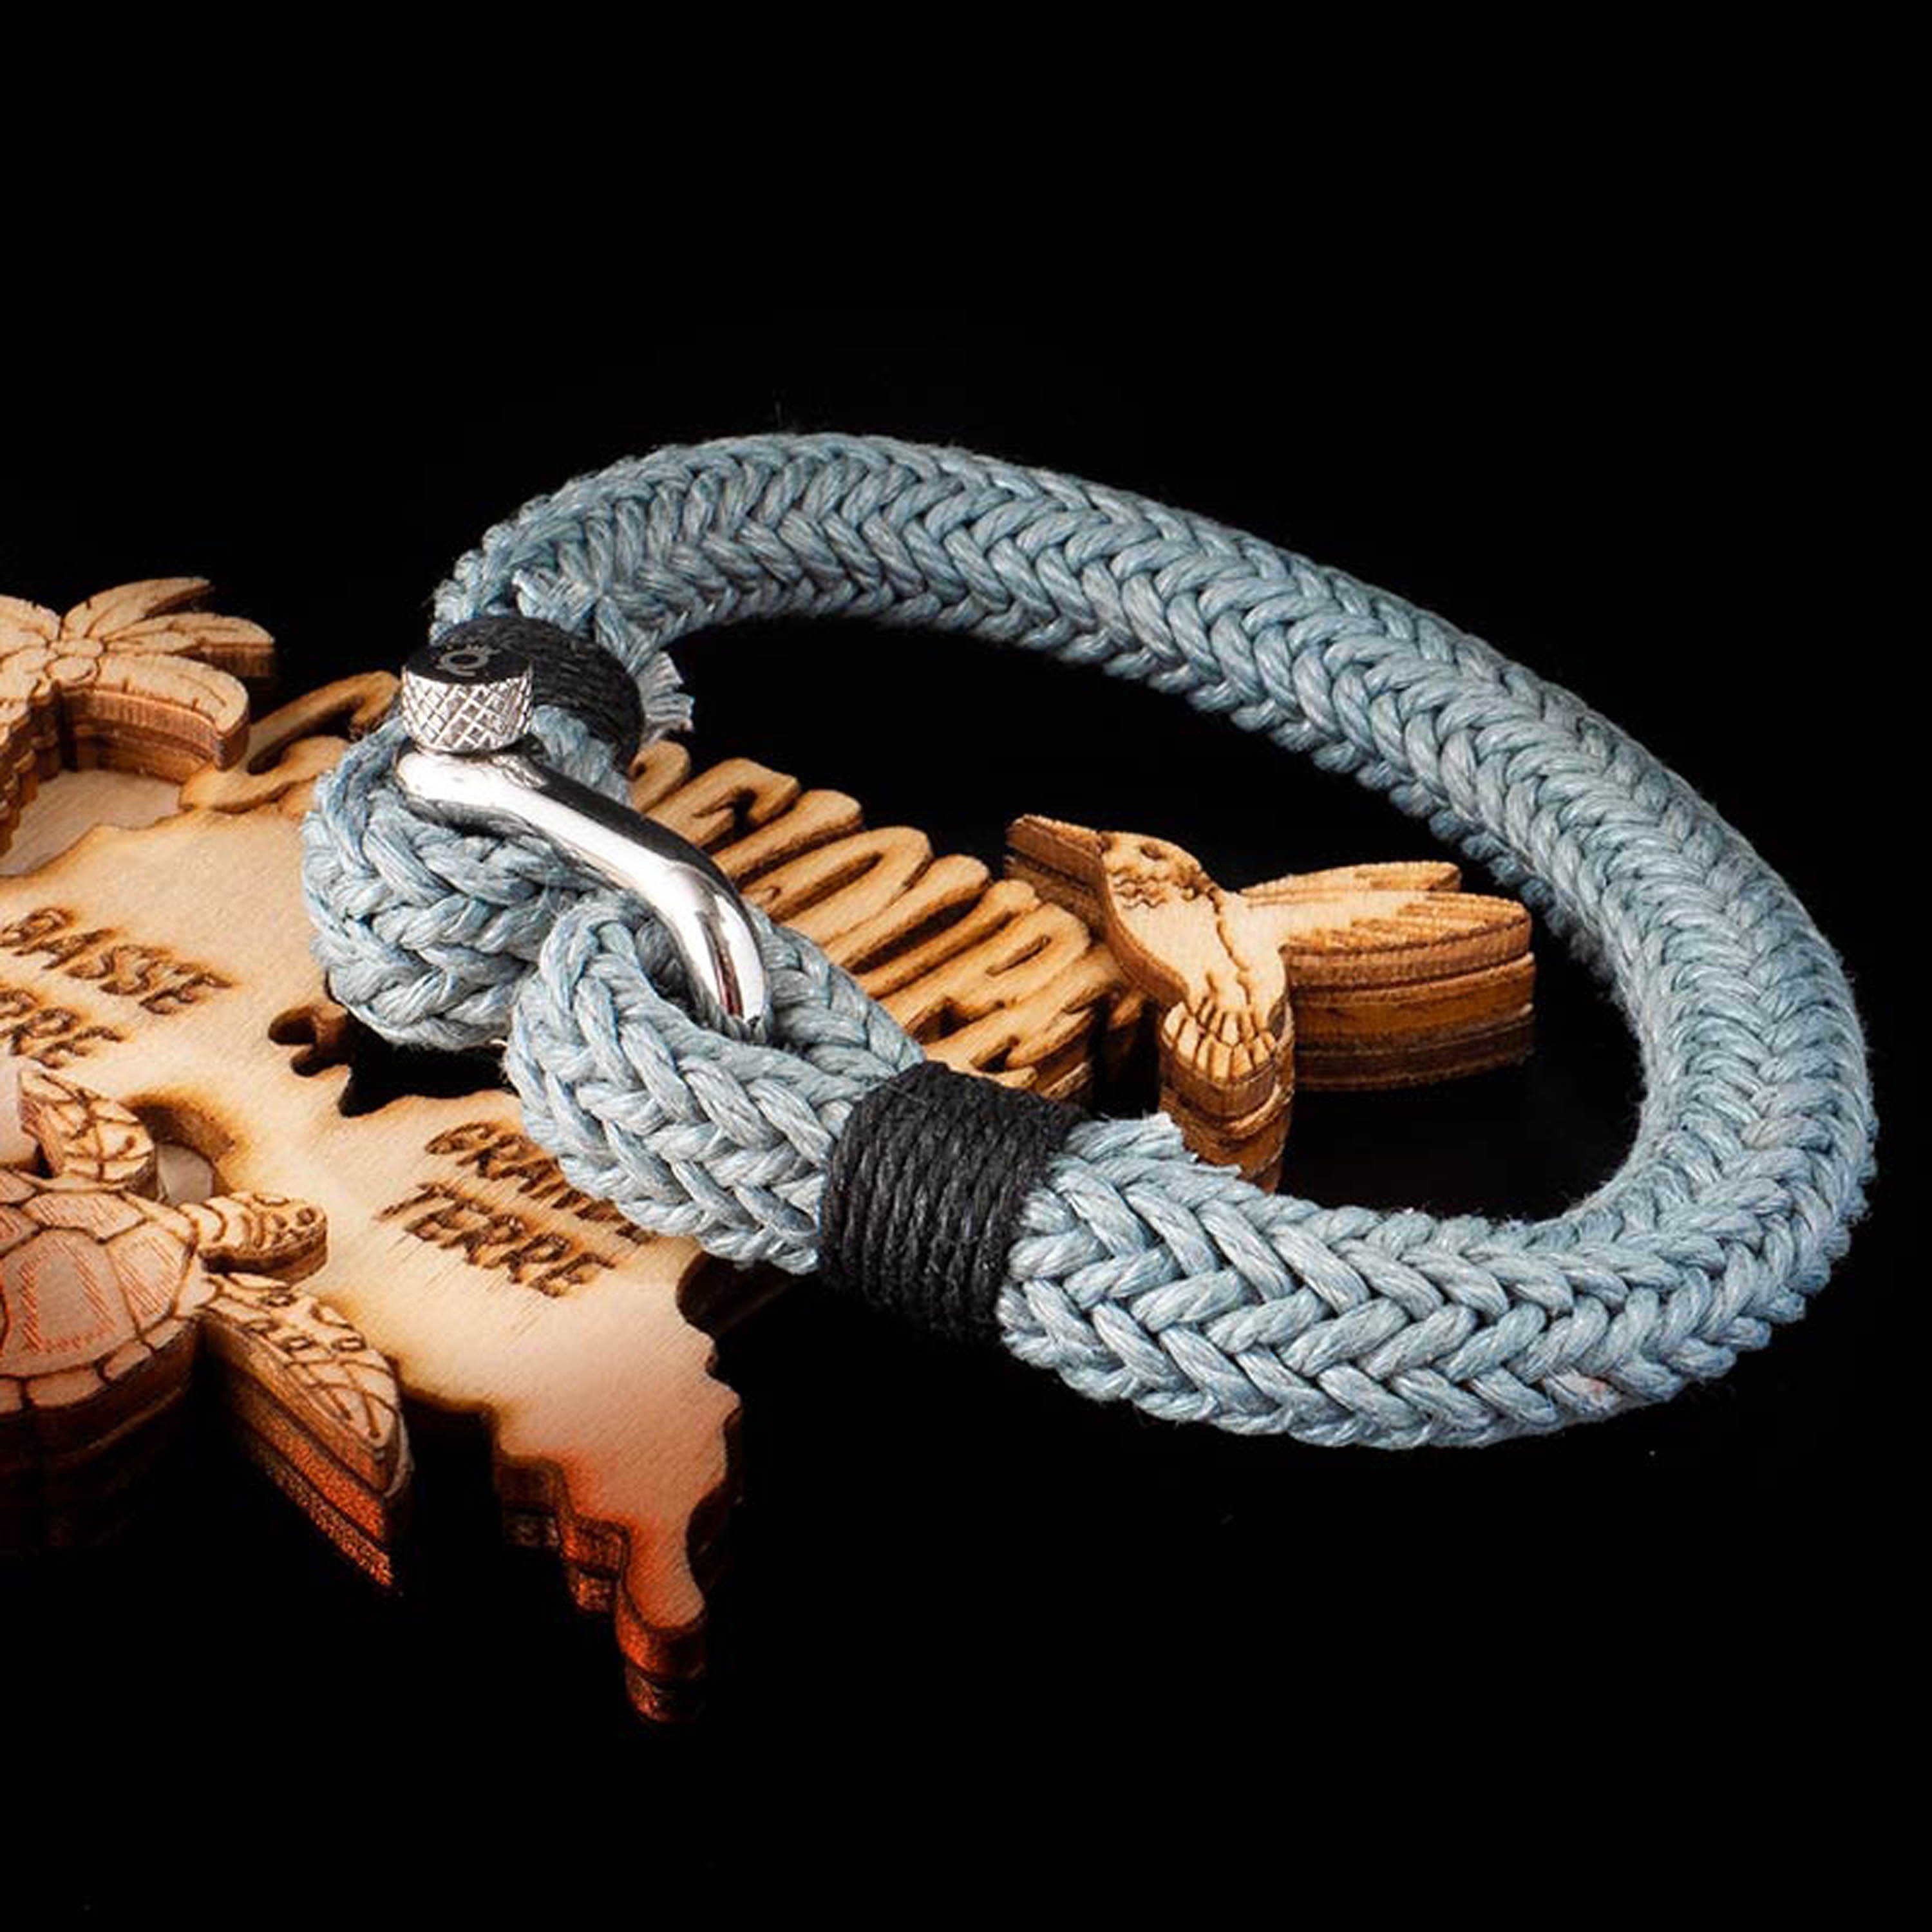 "AQUA" UNIQAL.de Armband aus Segeltau, (Edelstahl, Style, nautics, handgefertigt) Schäckel Segeltau Armband verschluss Nerissa Maritime Casual